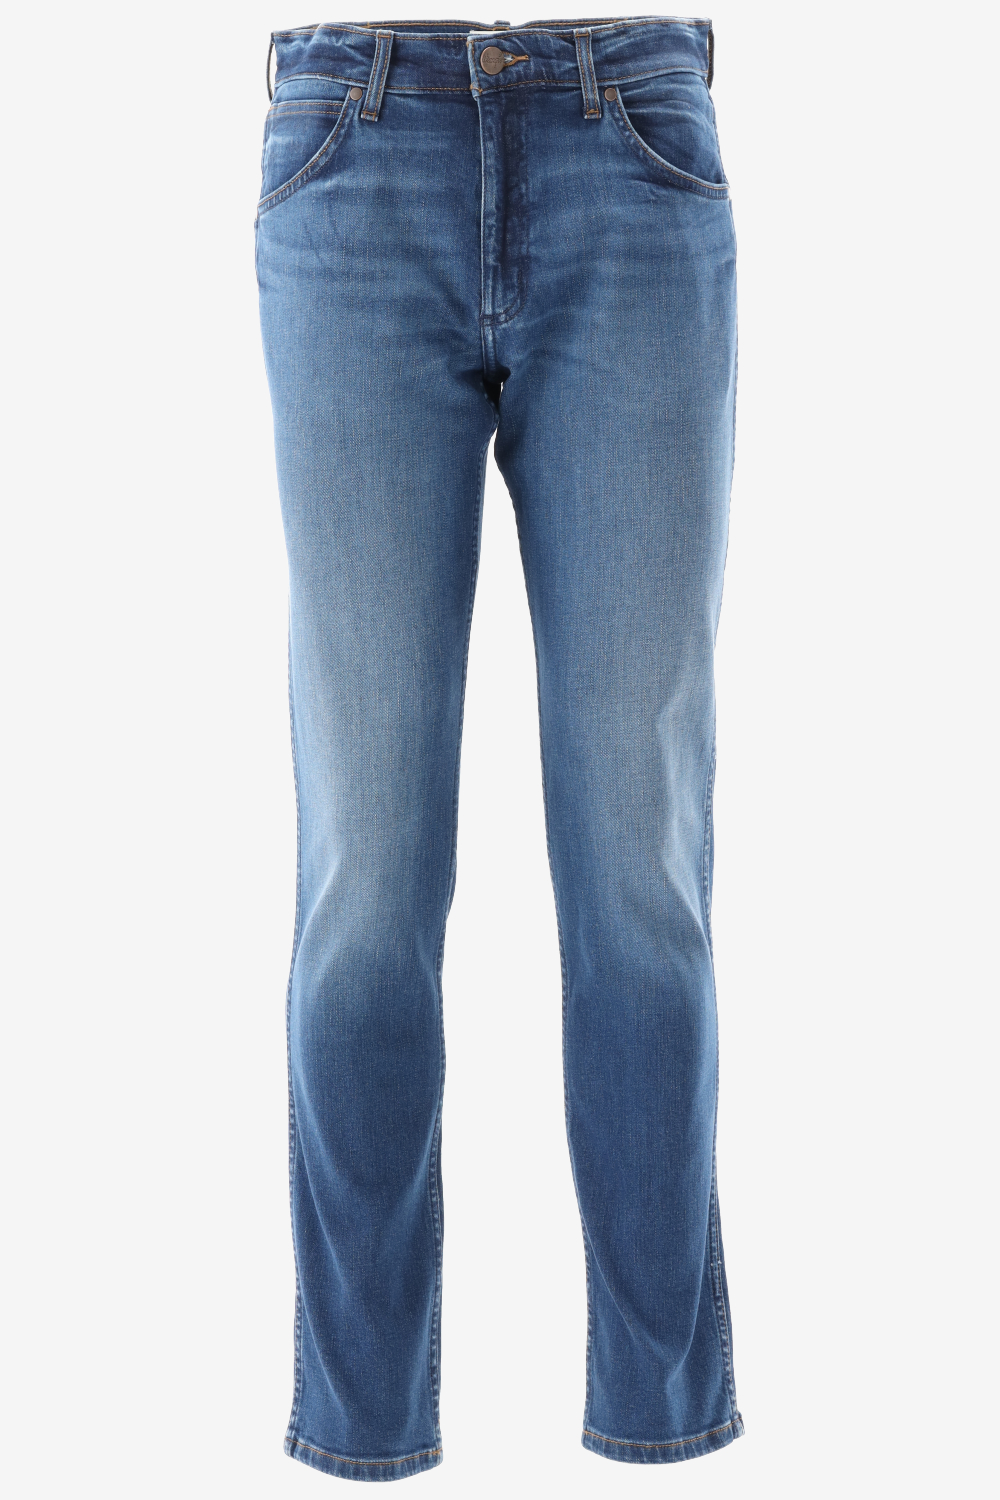 Wrangler Jeans Greensboro -modern Fit - Blauw - 40-34